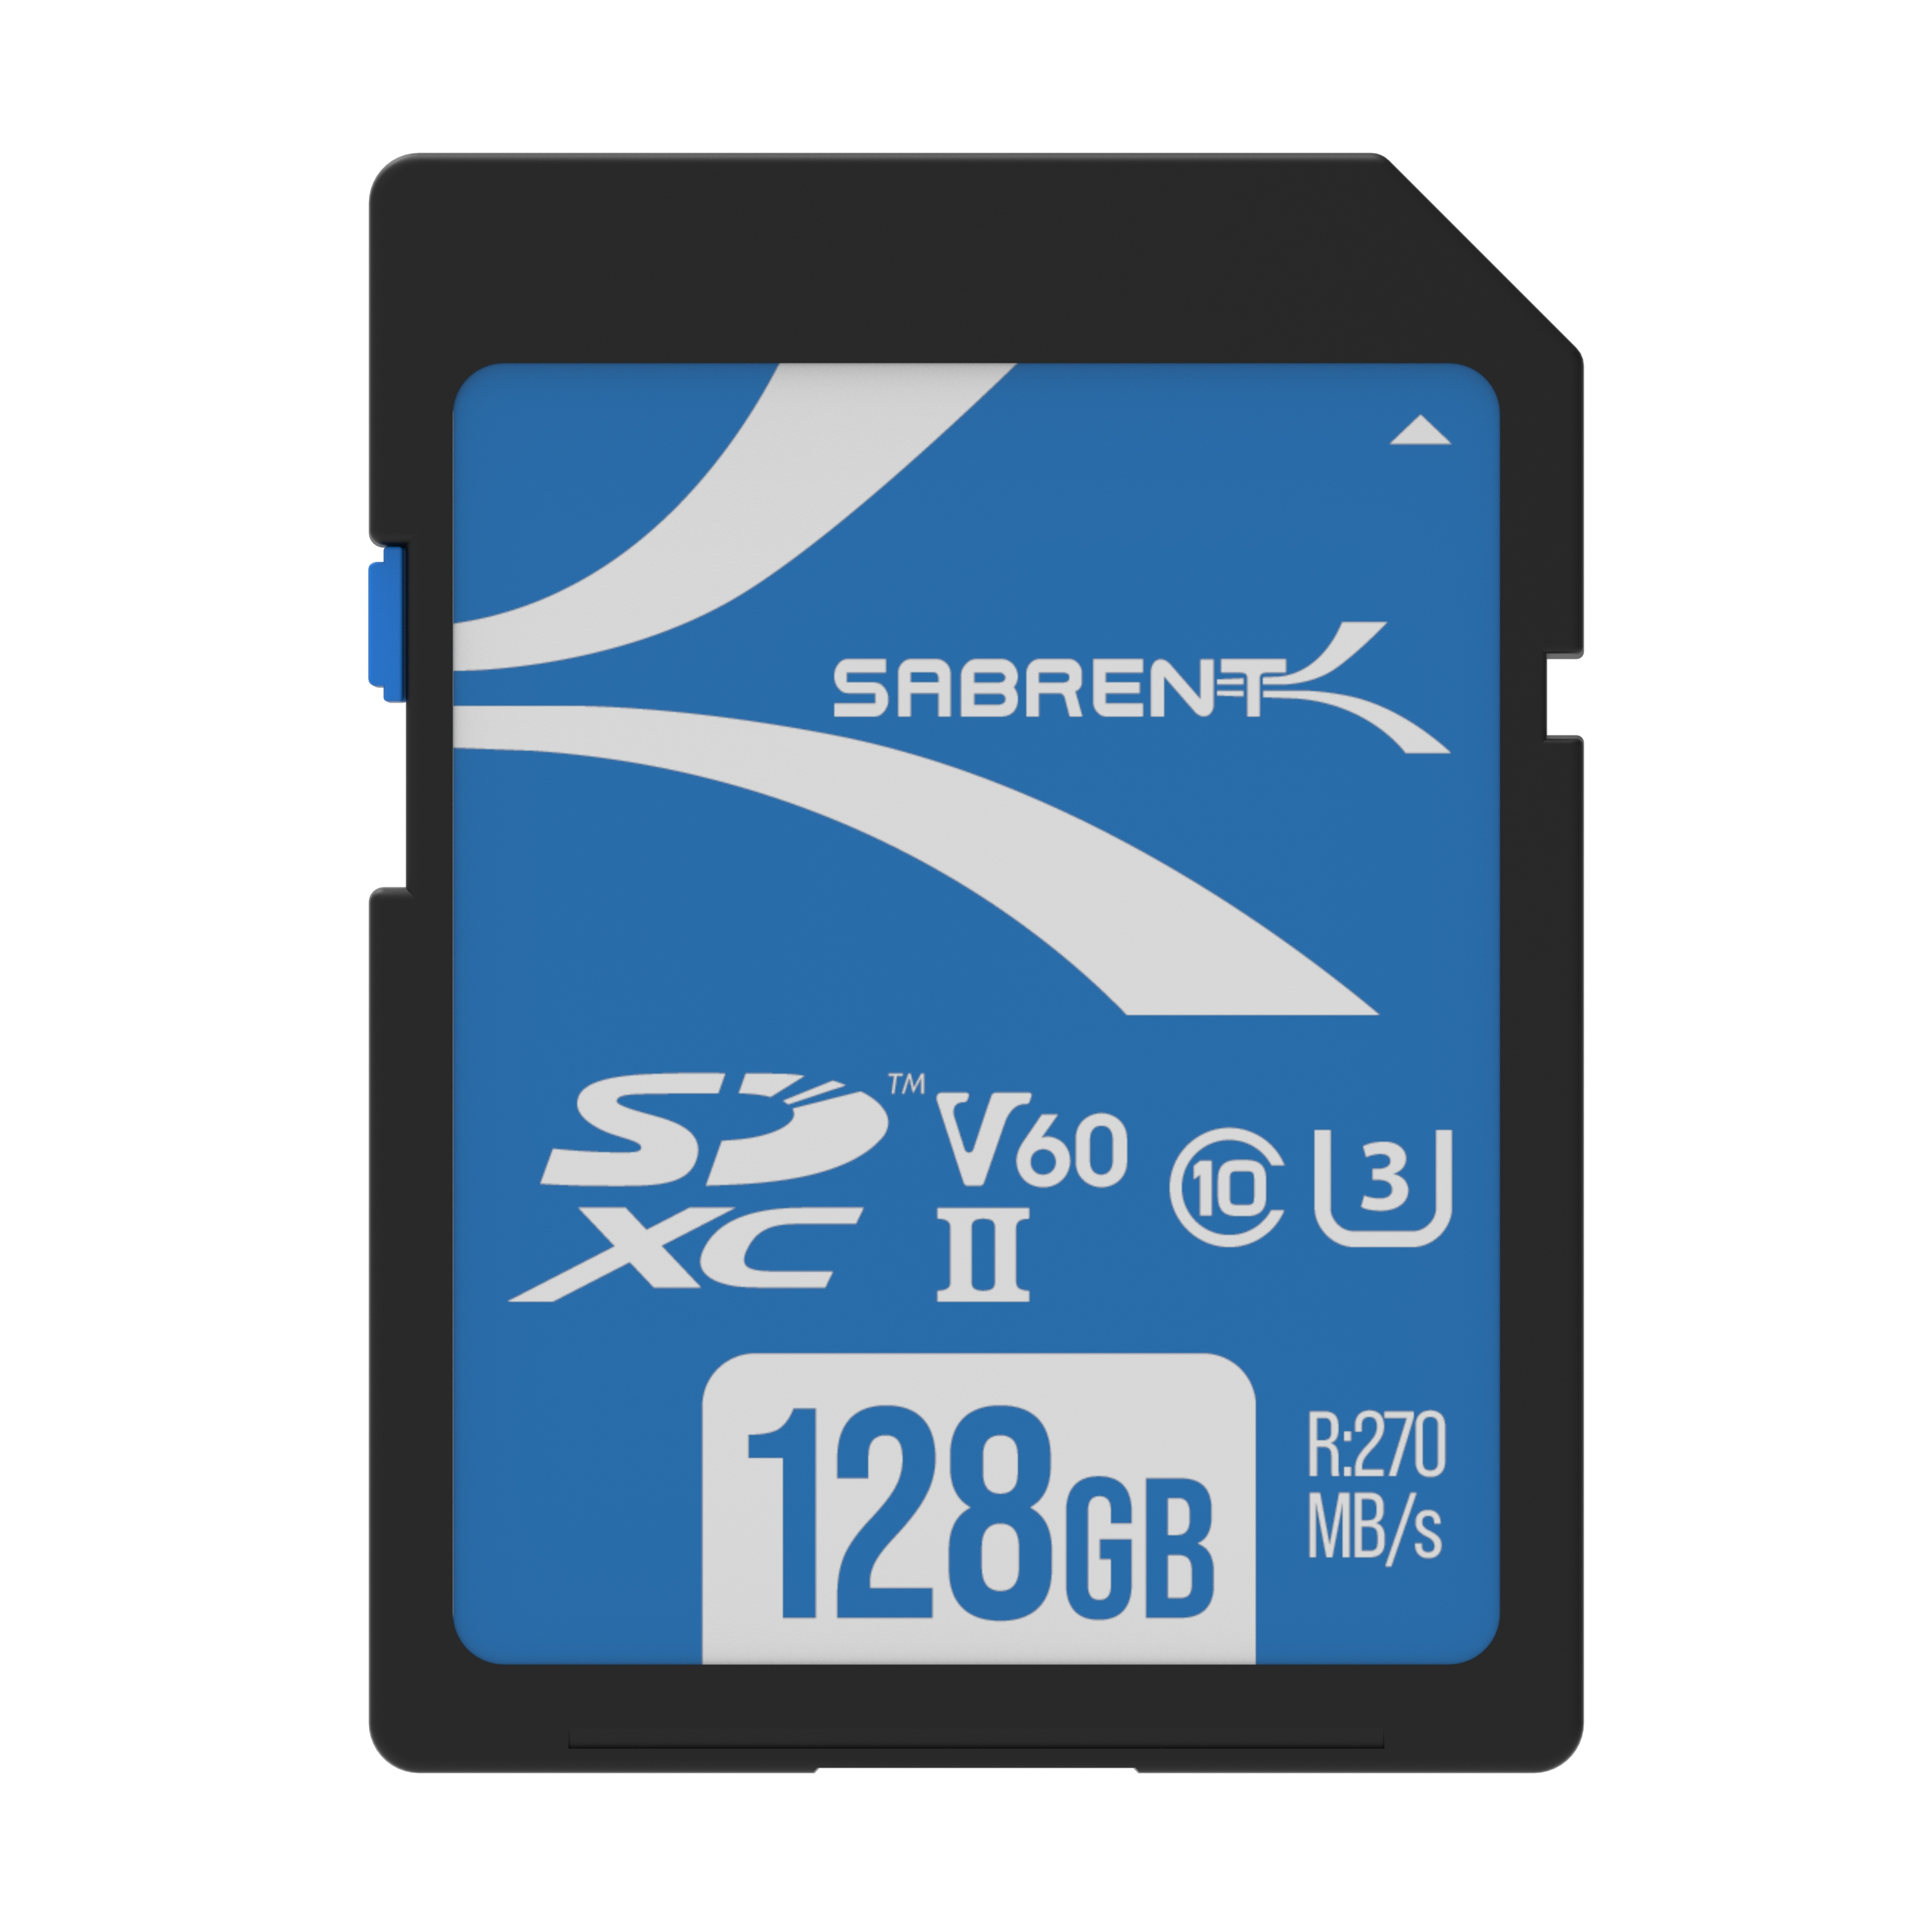 SABRENT V60 MB/s 270 128 UHS-II, Karte, GB, 128GB SD SD SDXC